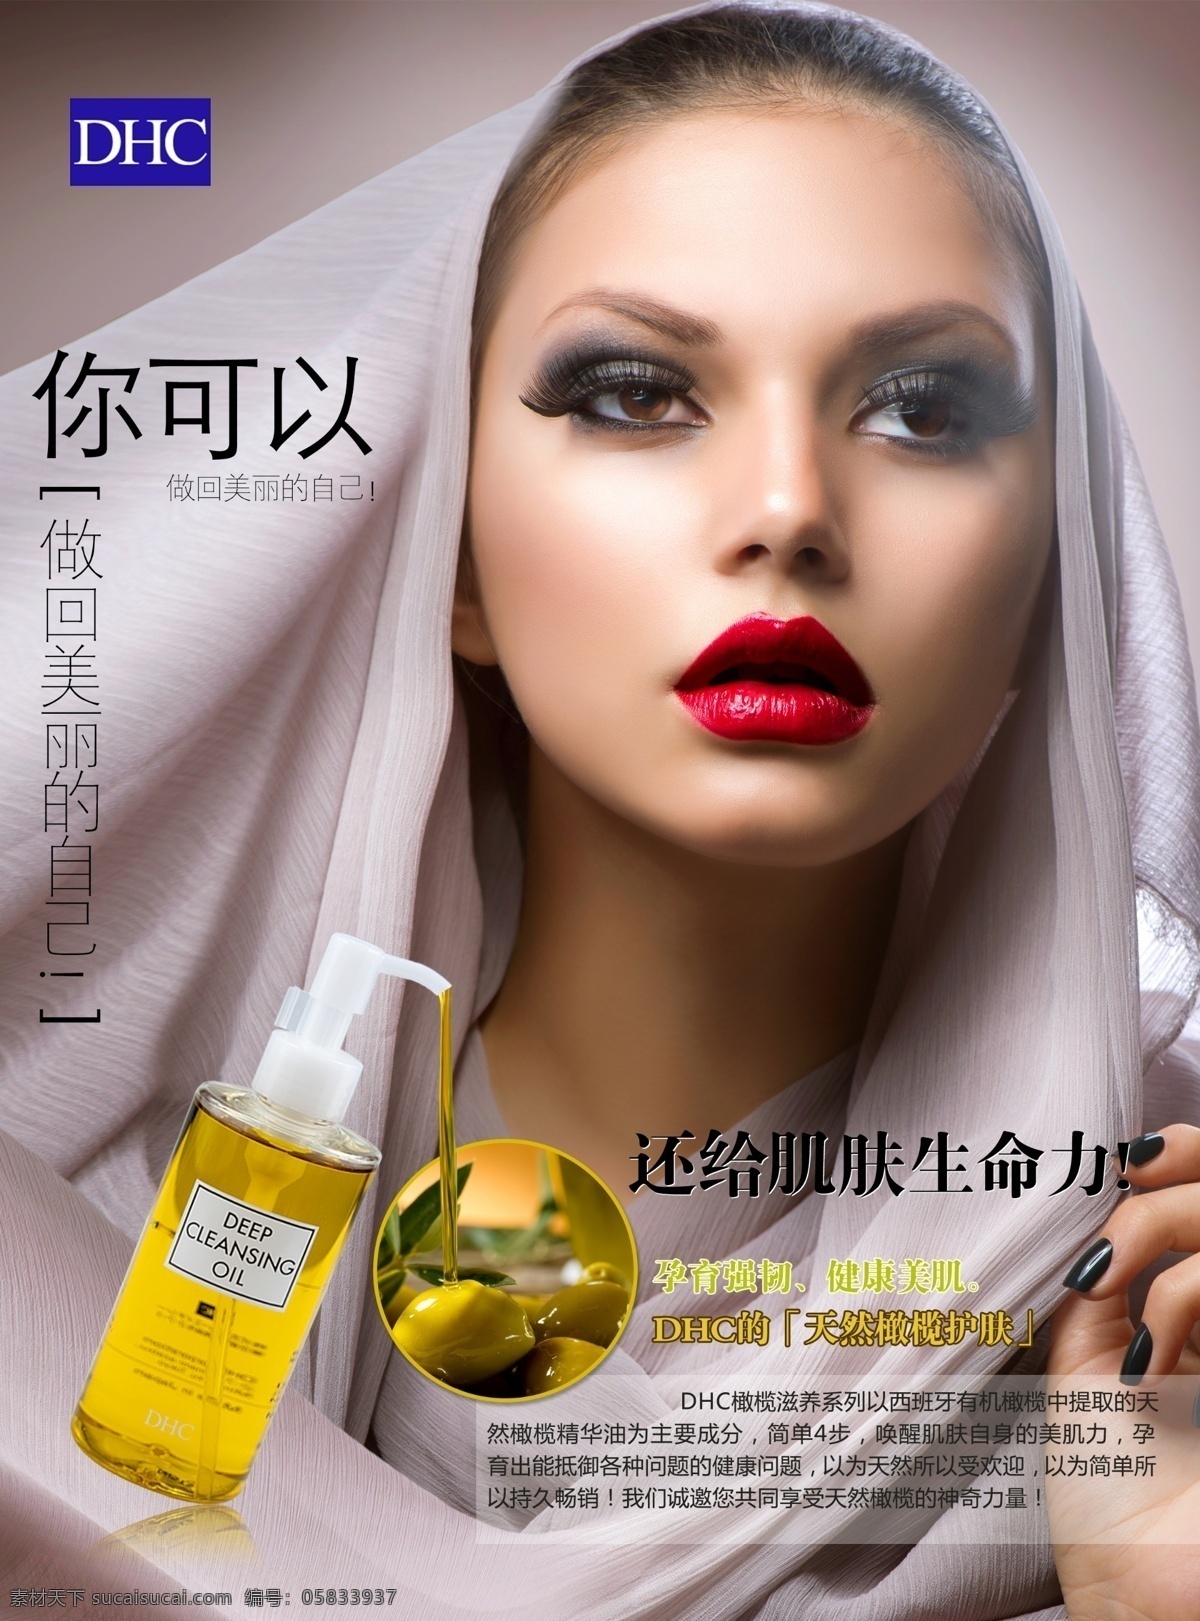 dhc卸妆油 化妆美女 美女 红唇 外国美女 橄榄油 画册设计 广告设计模板 源文件